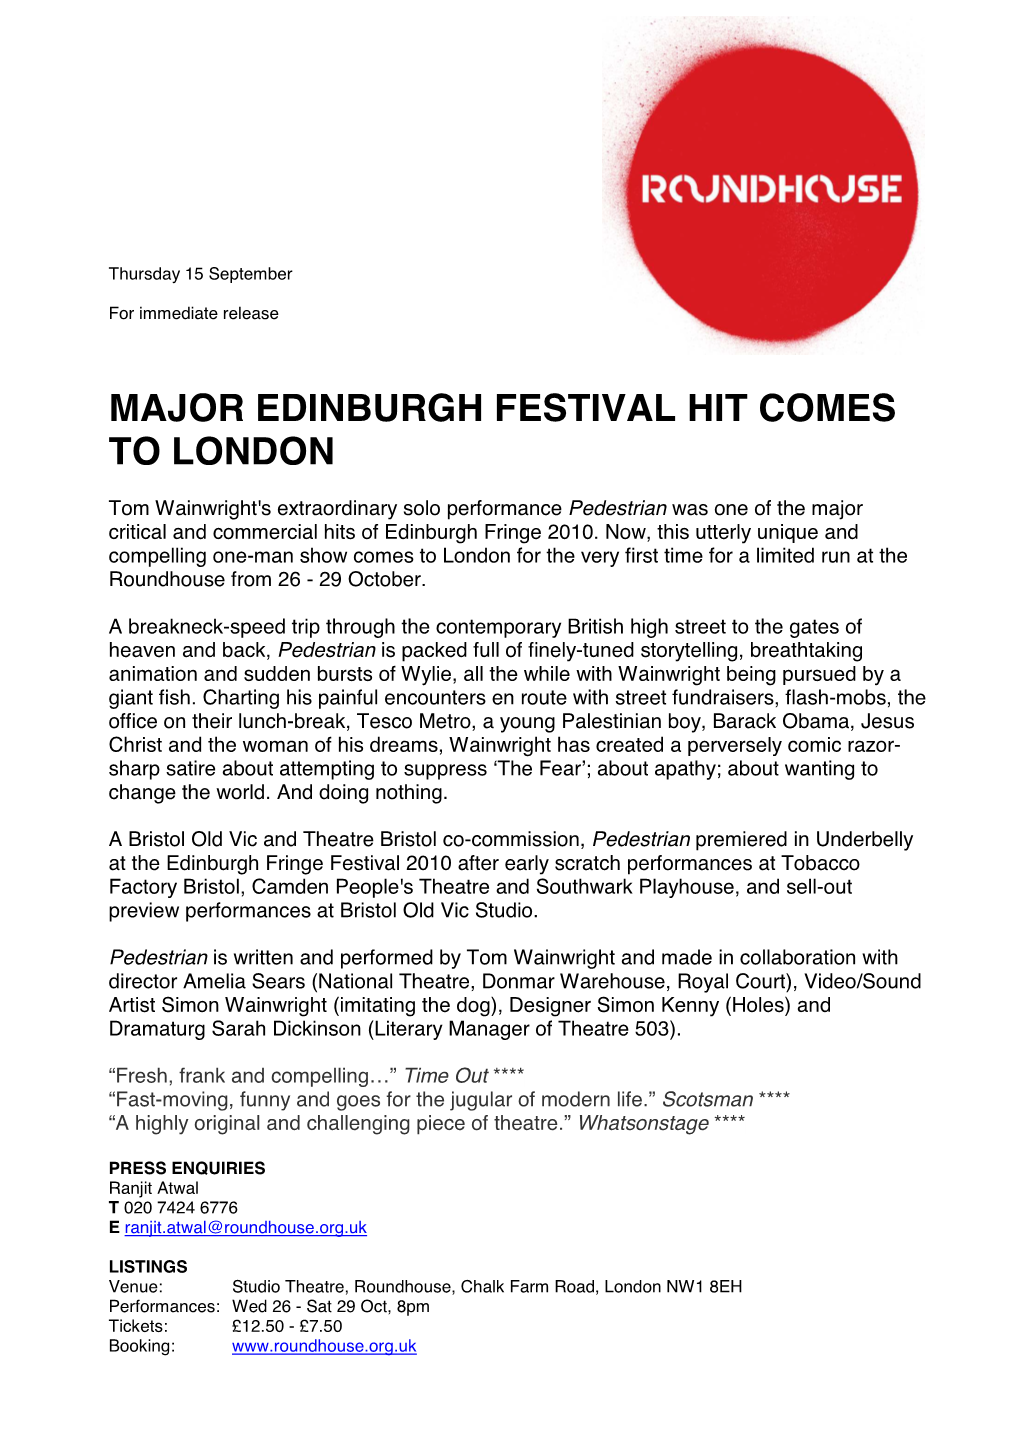 Major Edinburgh Festival Hit Comes to London